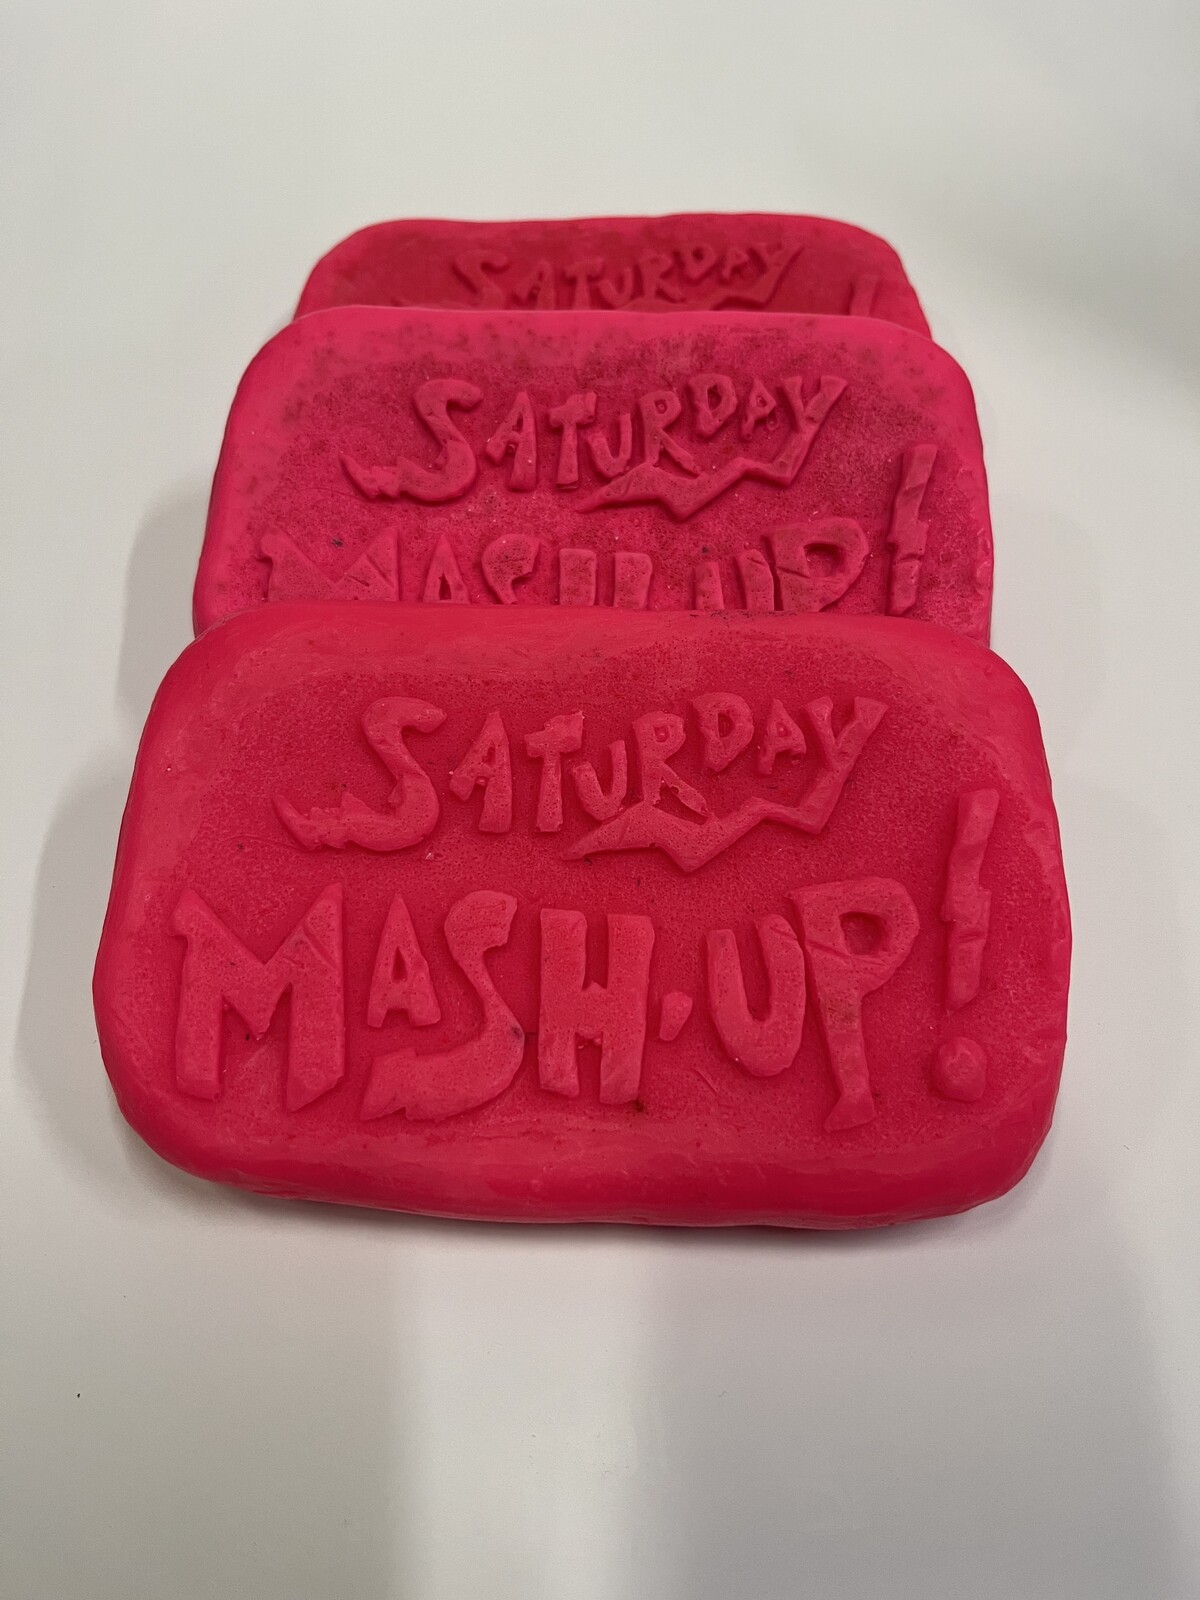 Saturday Mash-Up Live! CBBC
‘Showeroke’ guest prize.
Soap, pigment.